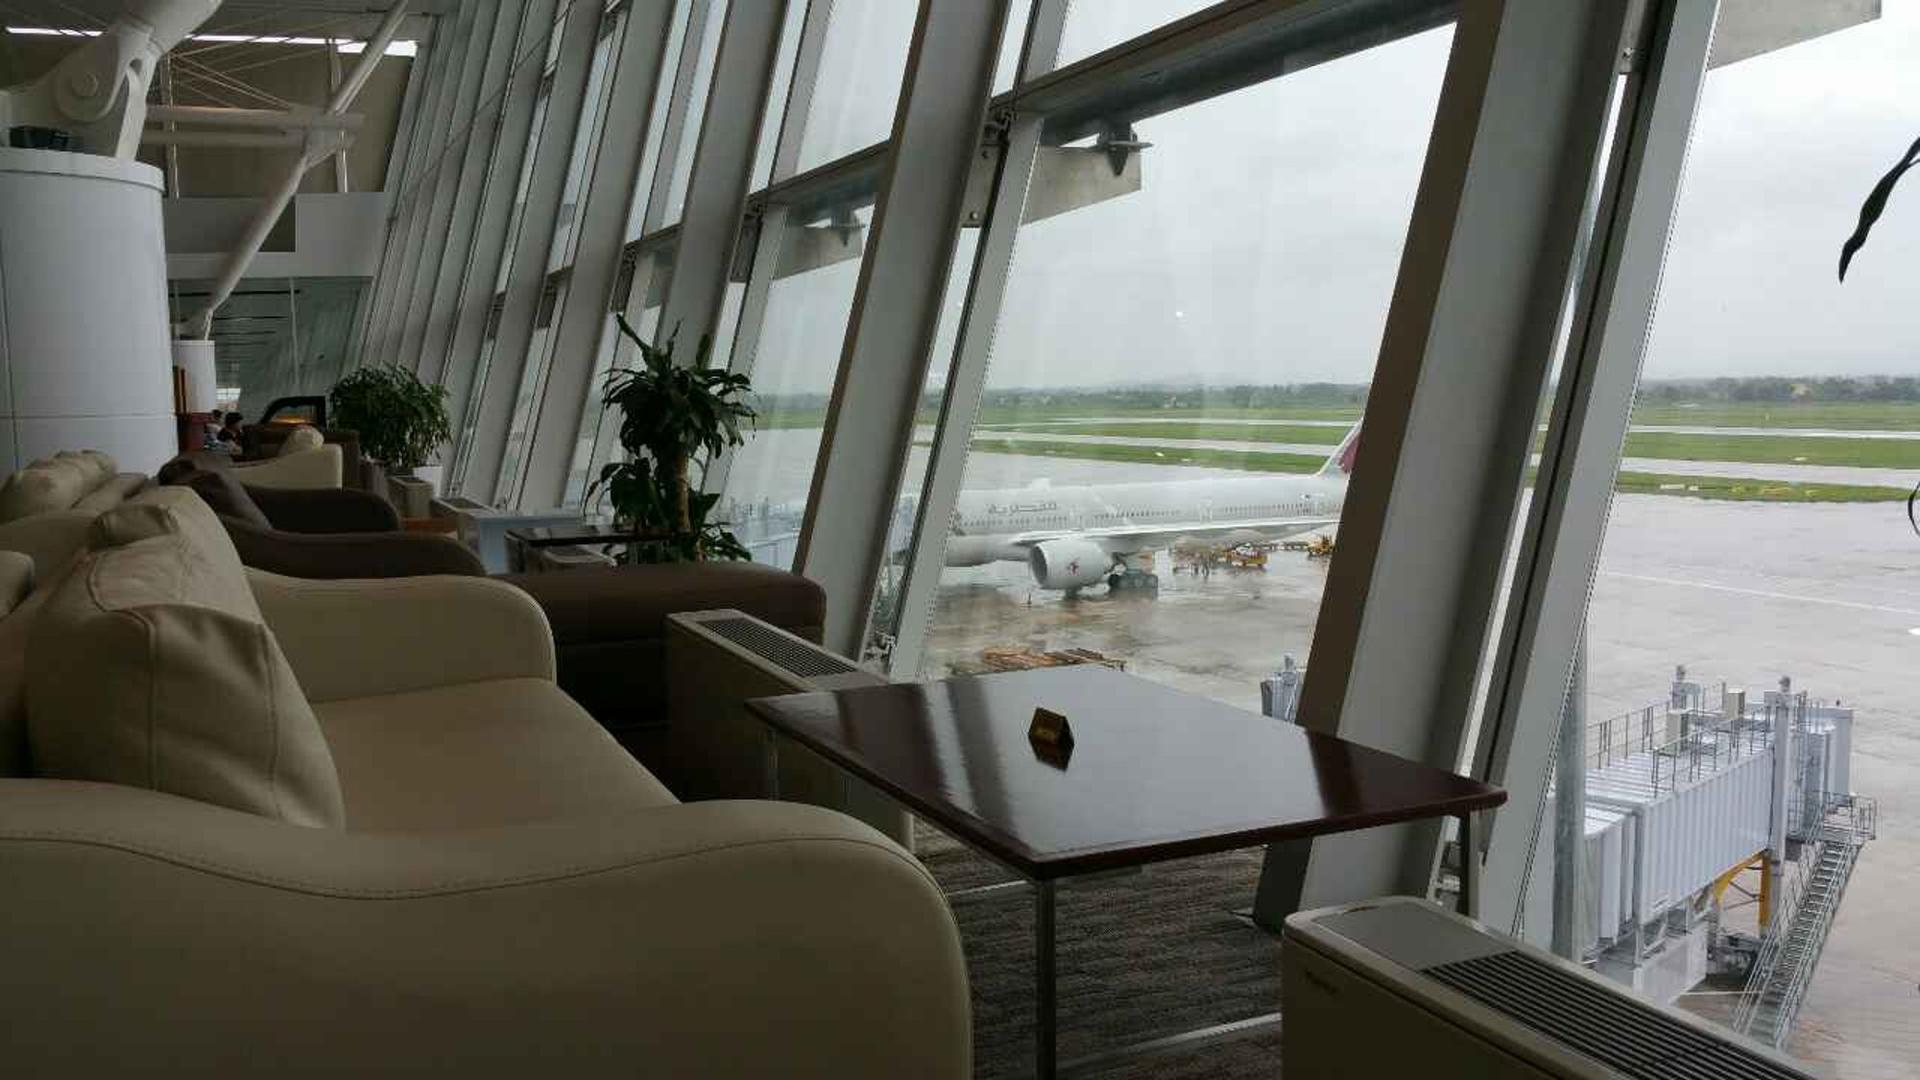 Noi Bai International Airport Business Lounge image 6 of 26